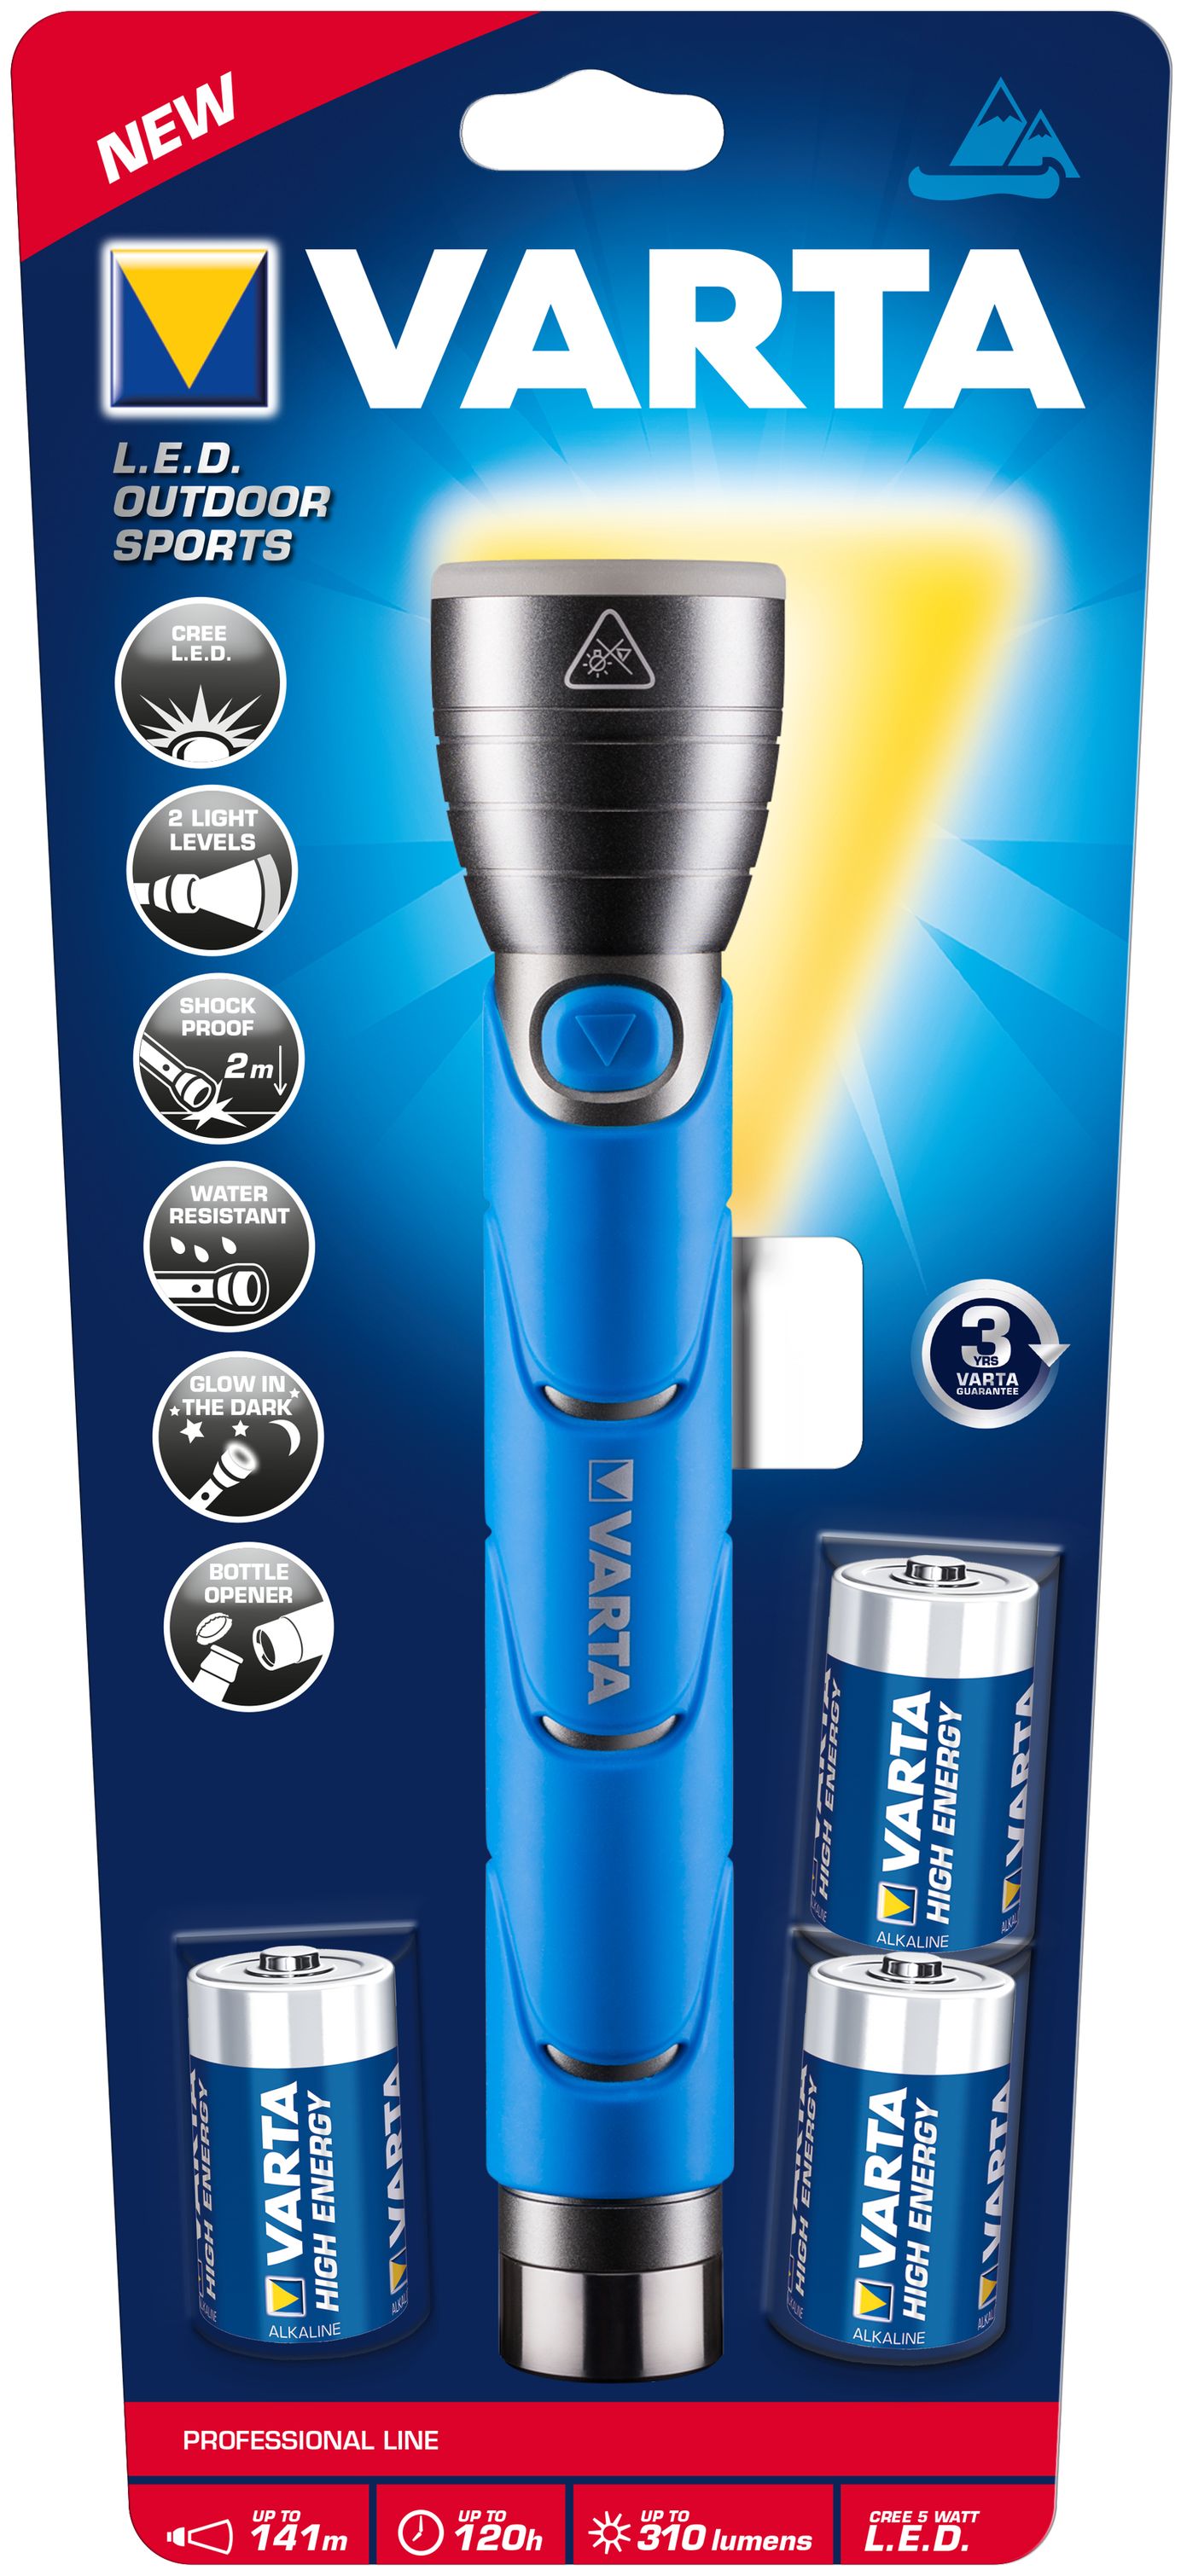 3C Varta Sports Boomstore LED-Taschenlampe Flashlight Outdoor 2 Leuchtmodi bei